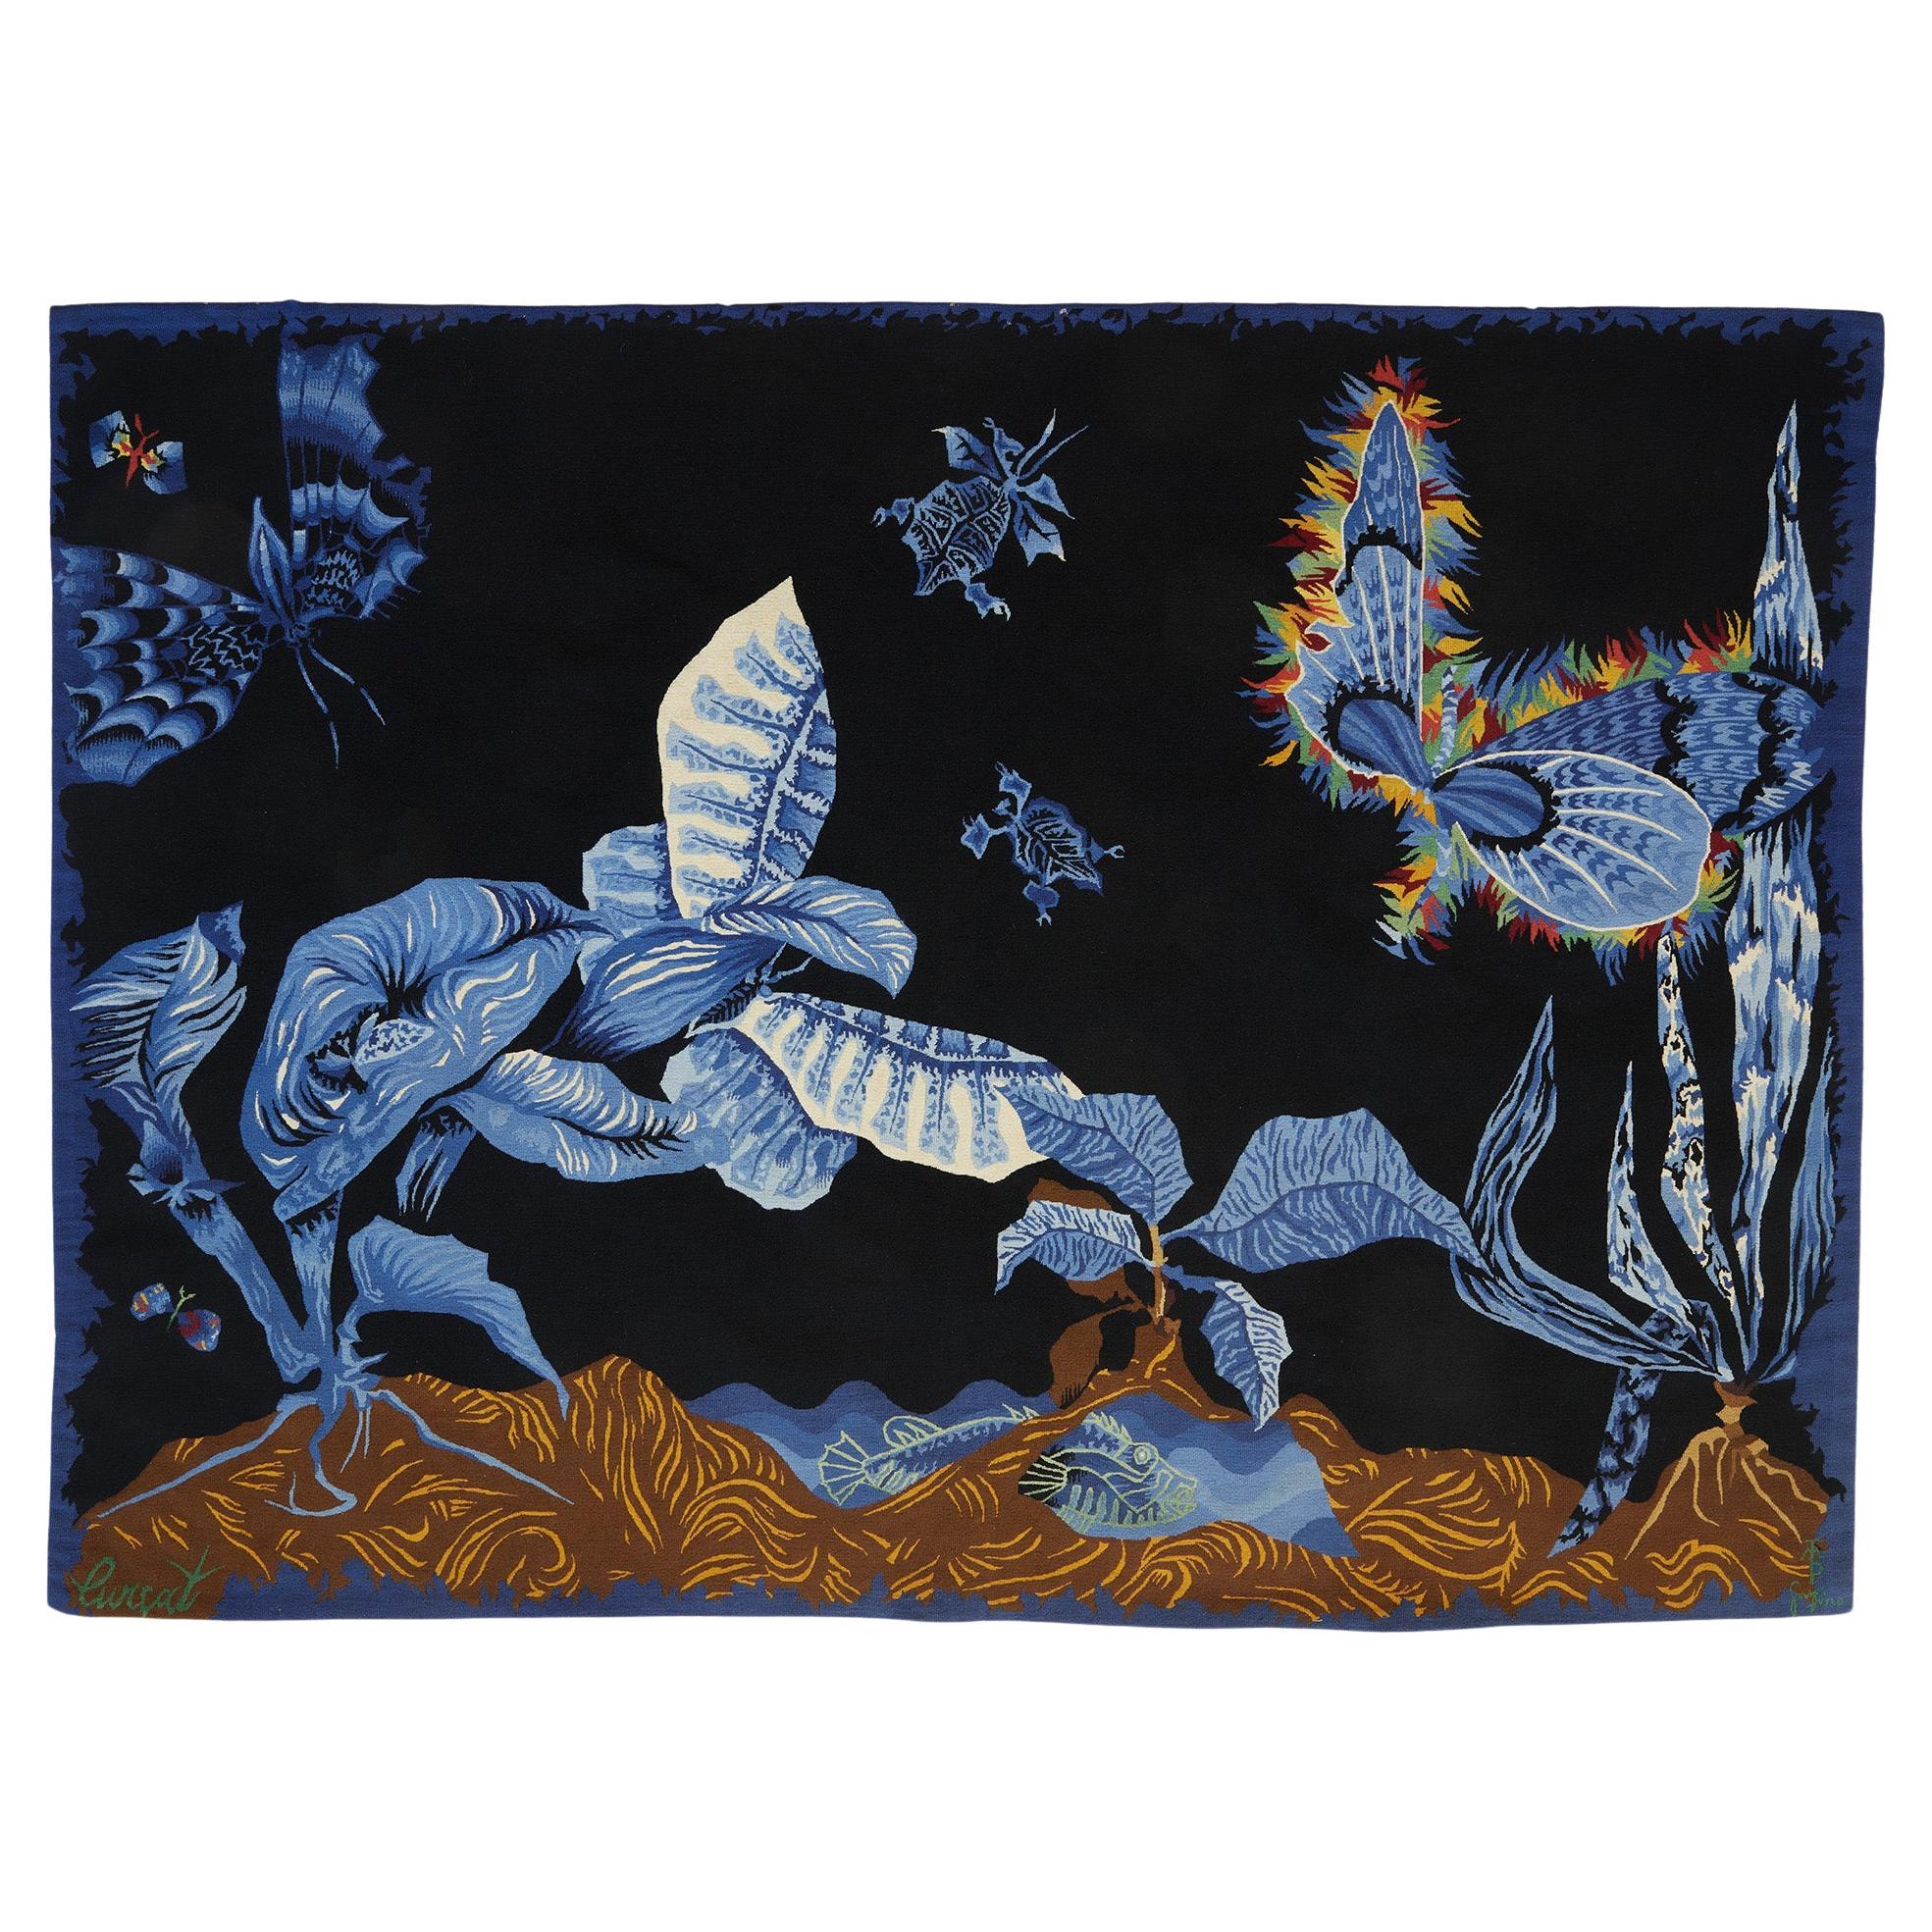 Jean Lurçat wall tapestry "Bleu de Bleu" Manufactura Tapeçarias Portalegre 1957